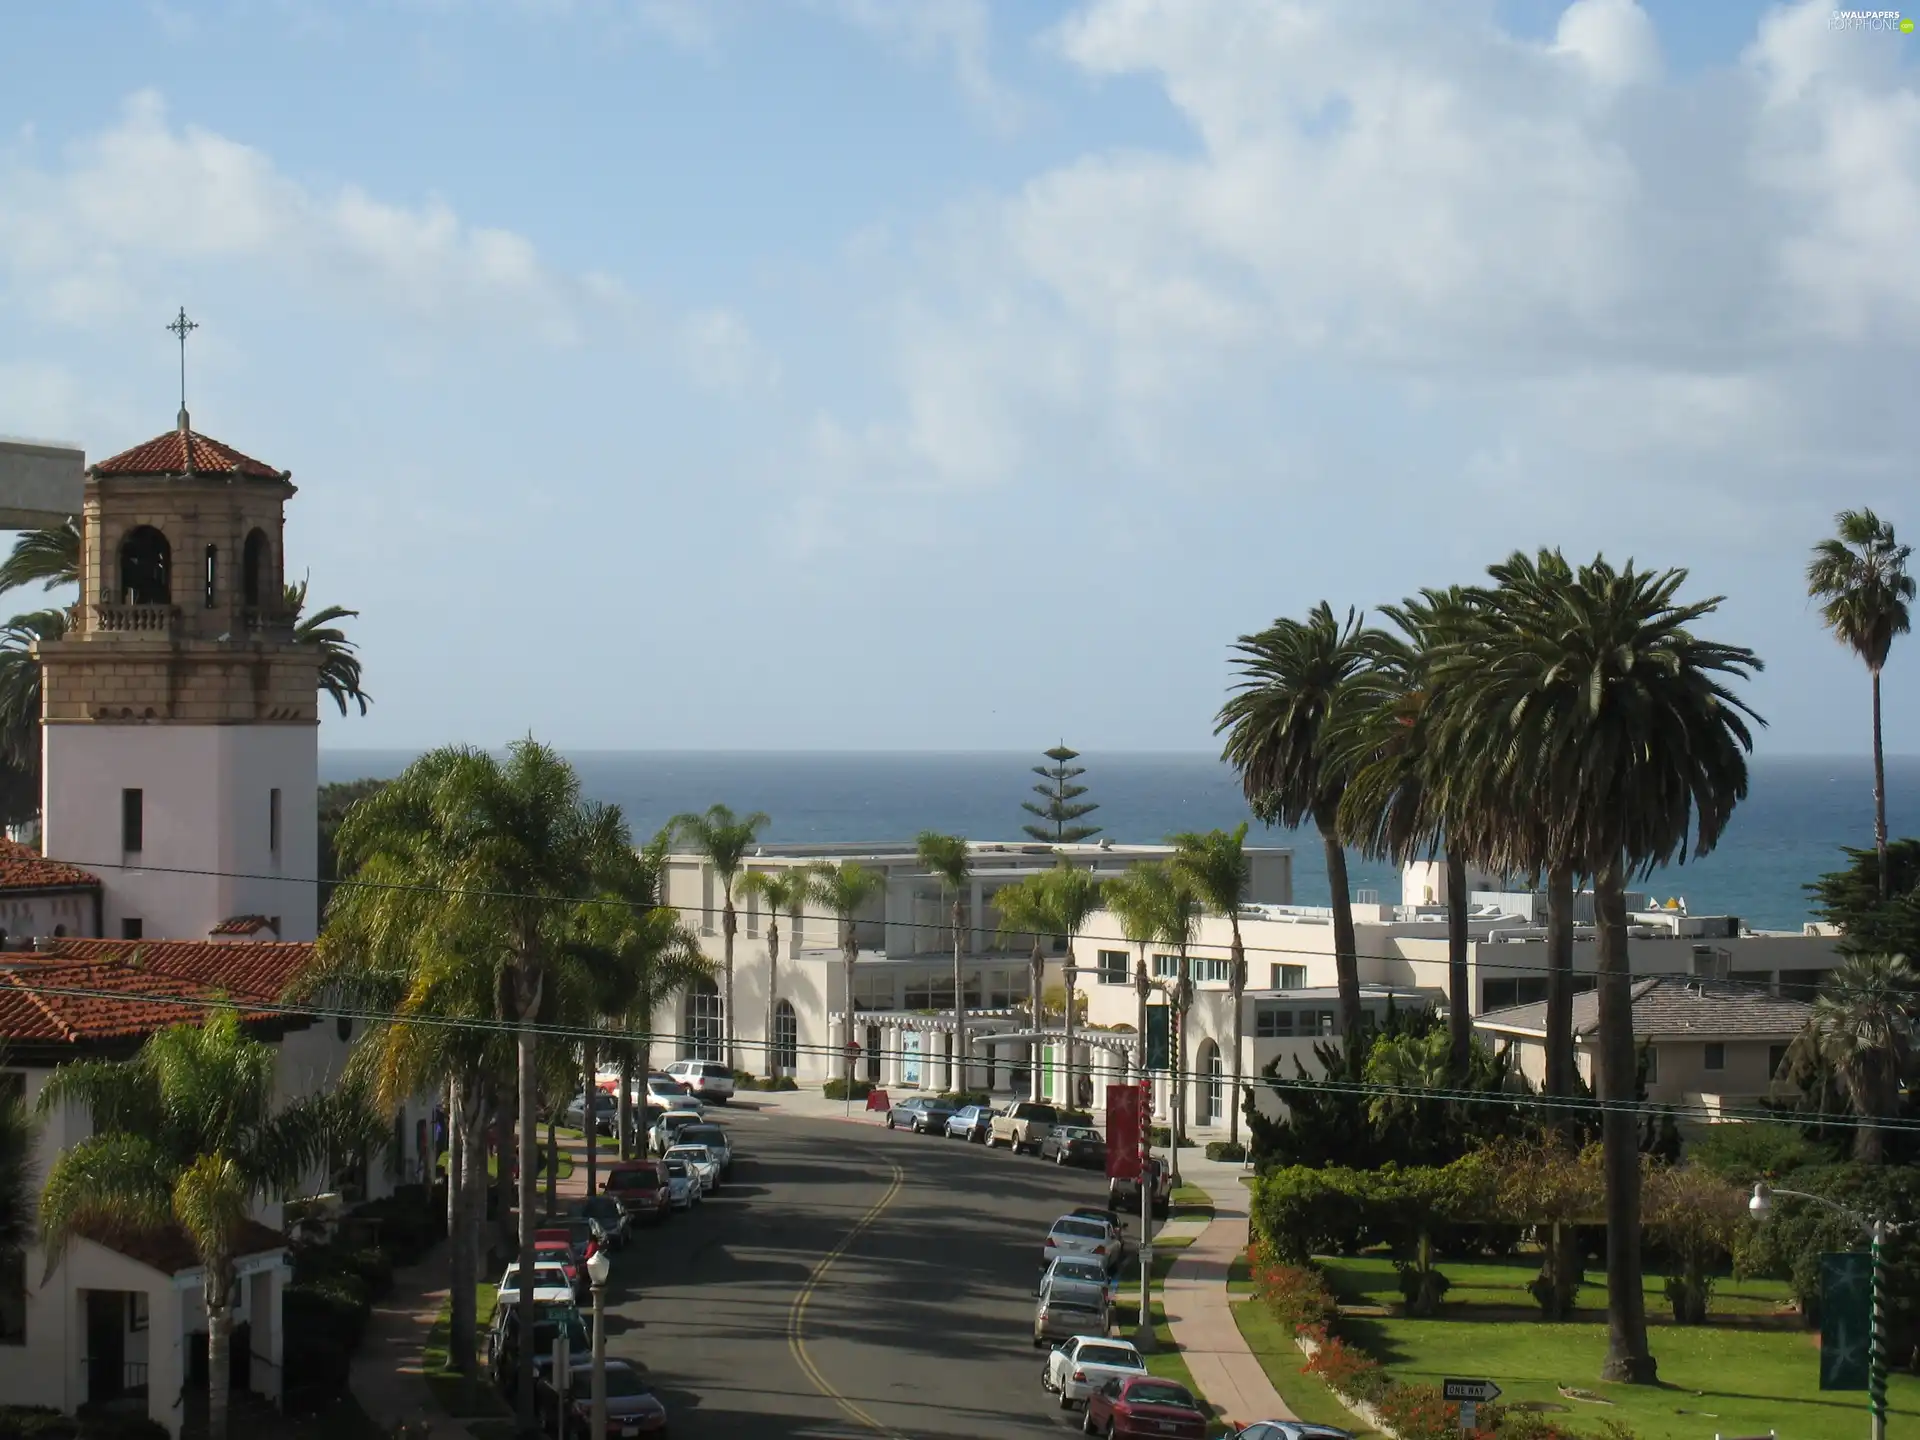 Palms, buildings, San Diego, Street, La Jolla